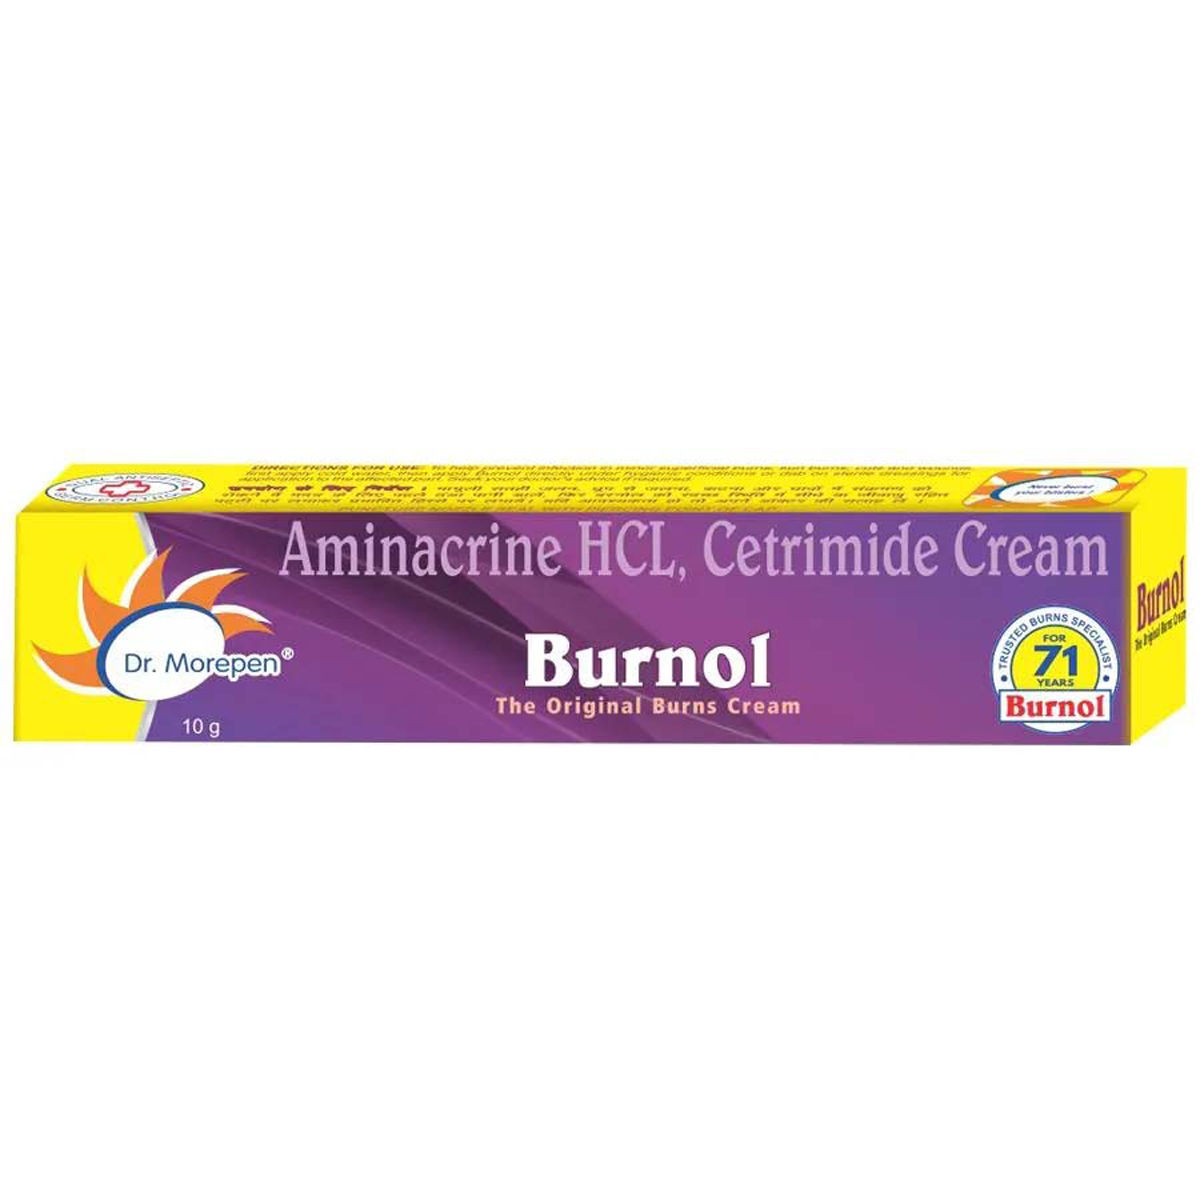 Dr. Morepen Burnol Cream, 10 gm, Pack of 1 